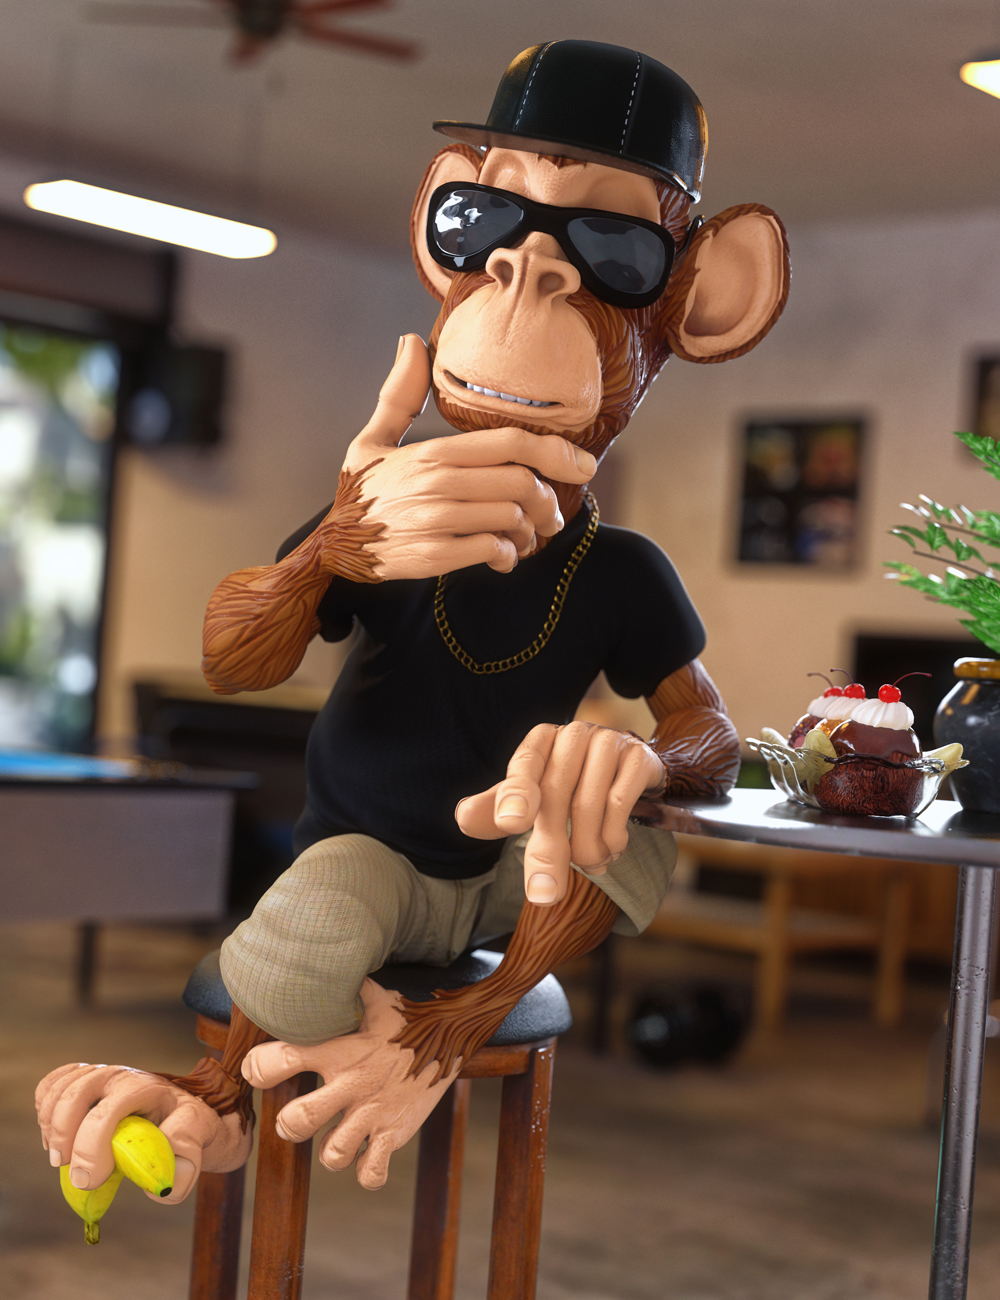 [Reallusion] Alfred the Toon Monkey FBX & iAvatar